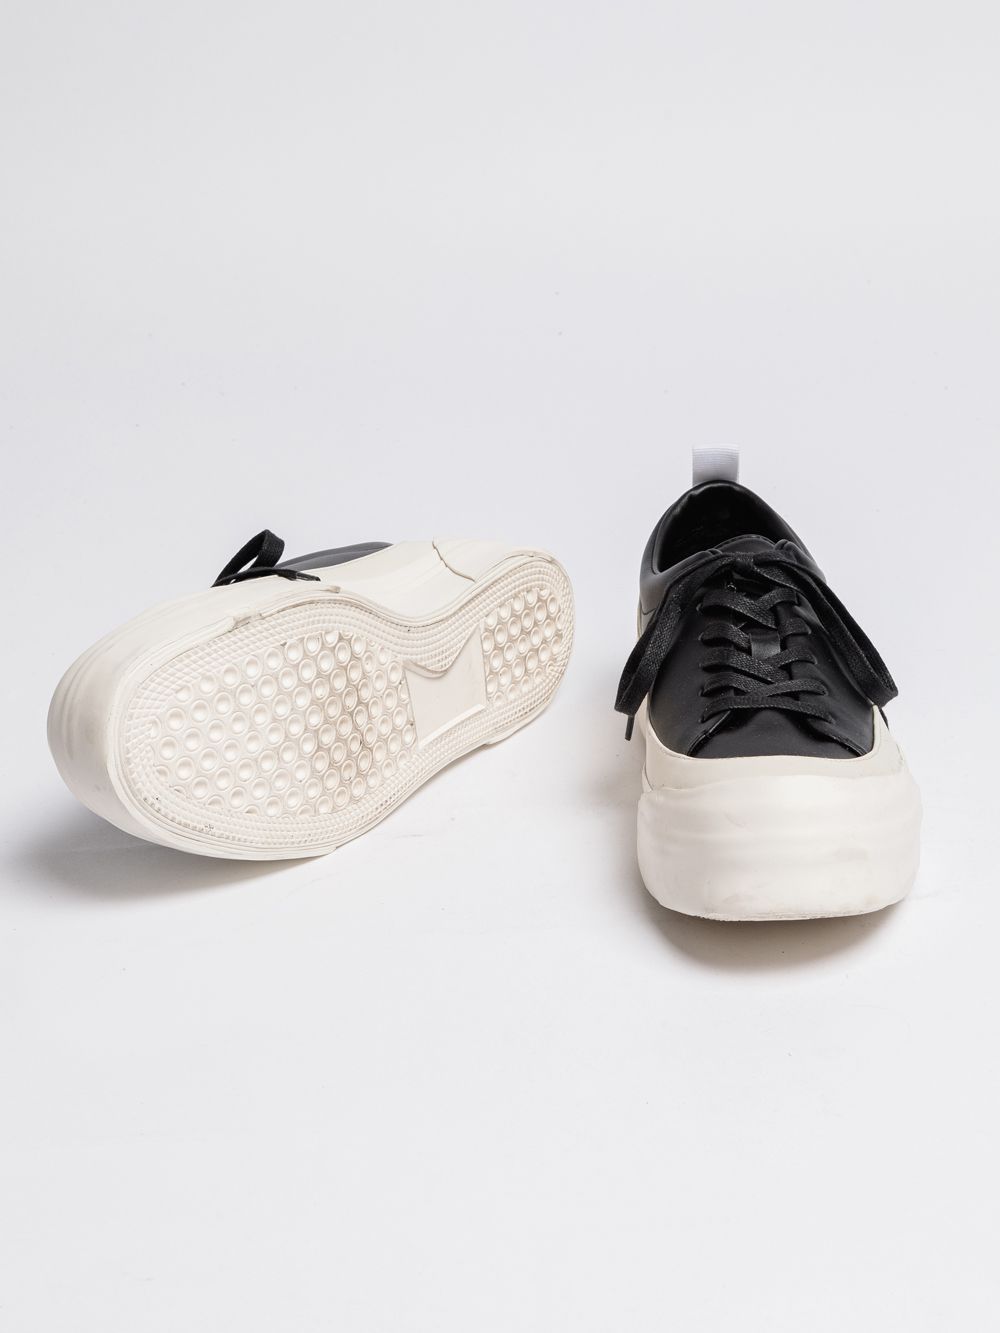 Low Cut Leather Sneakers"Black/White"/ローカットレザースニーカー"ブラック/ホワイト"